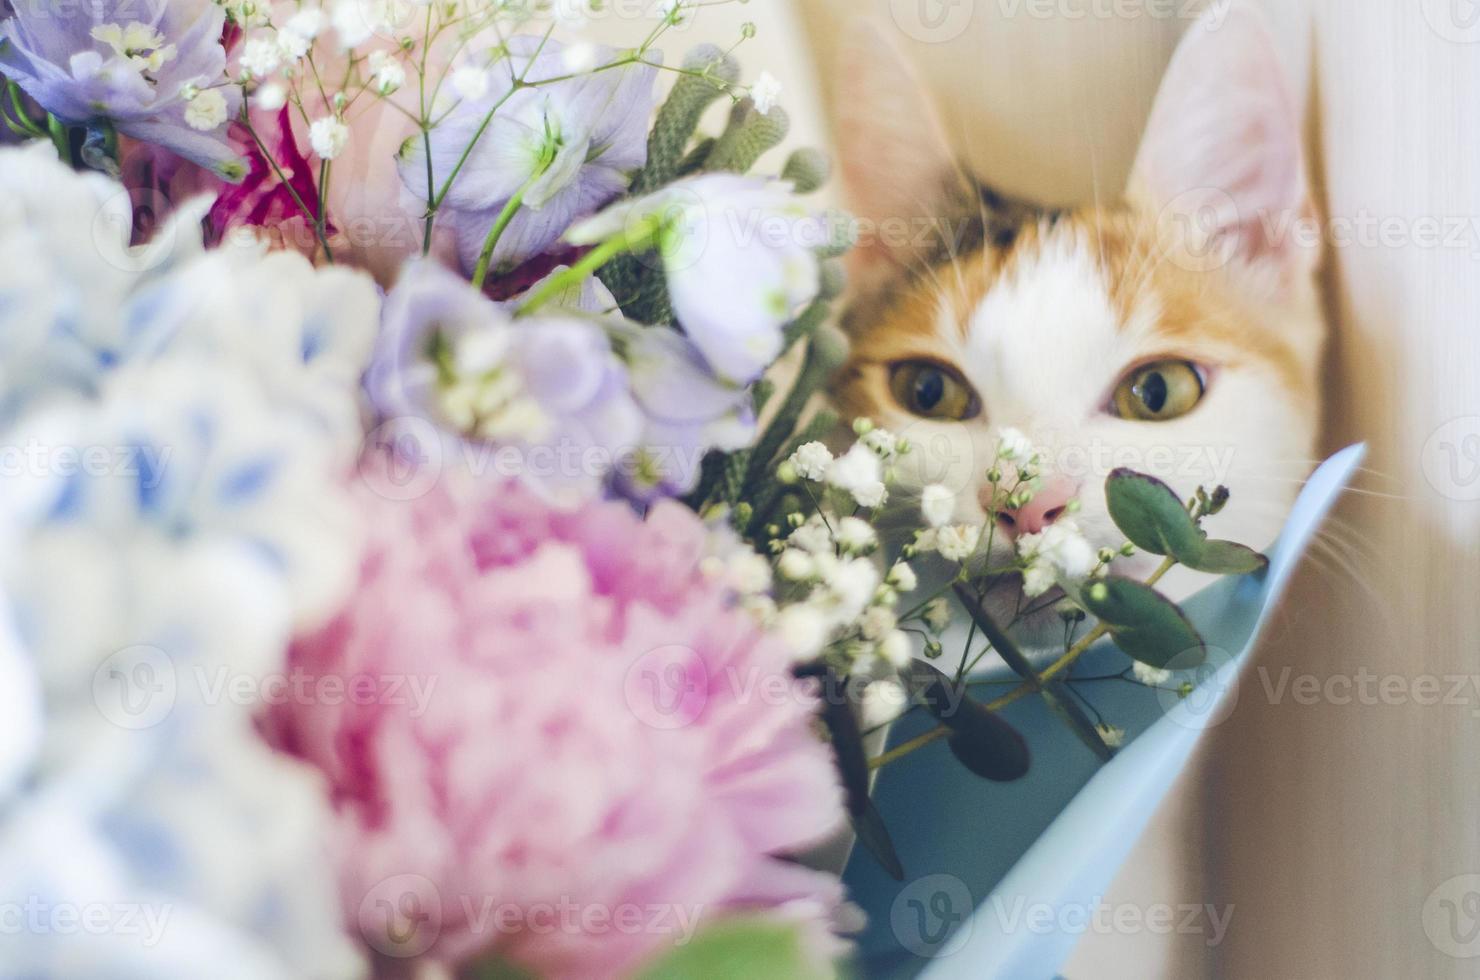 dreifarbige Hauskatze schnüffelt an den Blumen foto